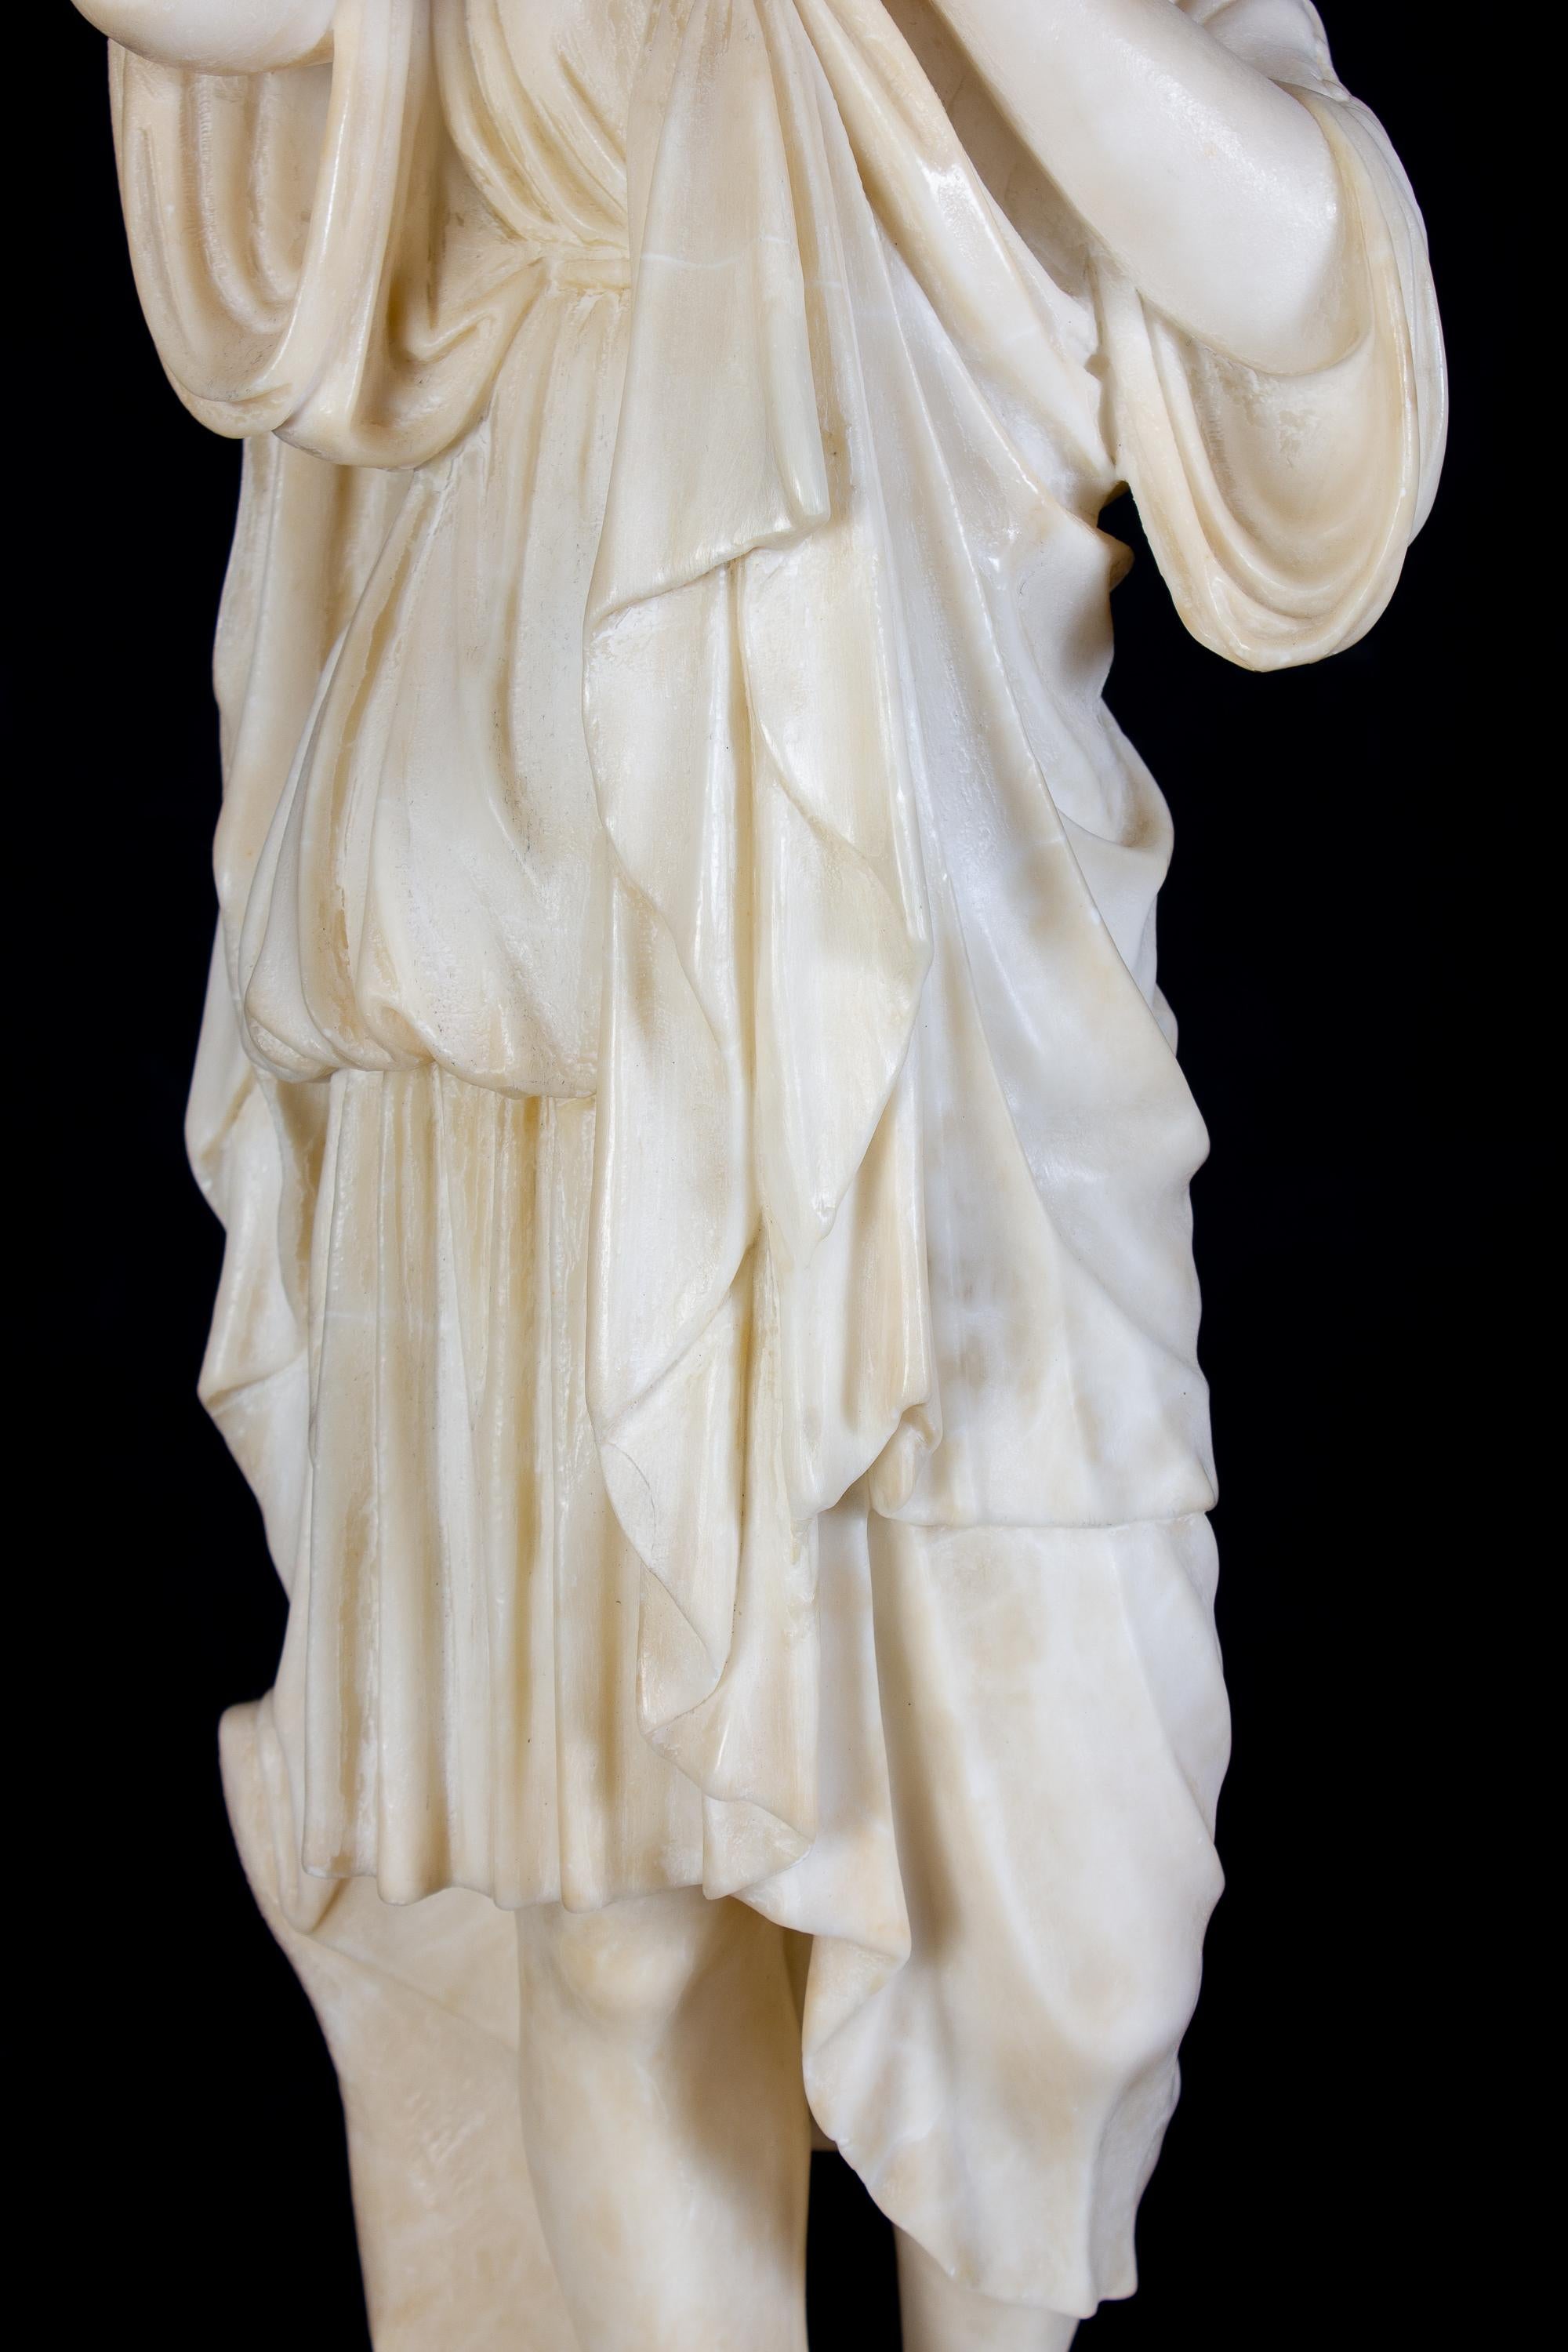 marble statue silk